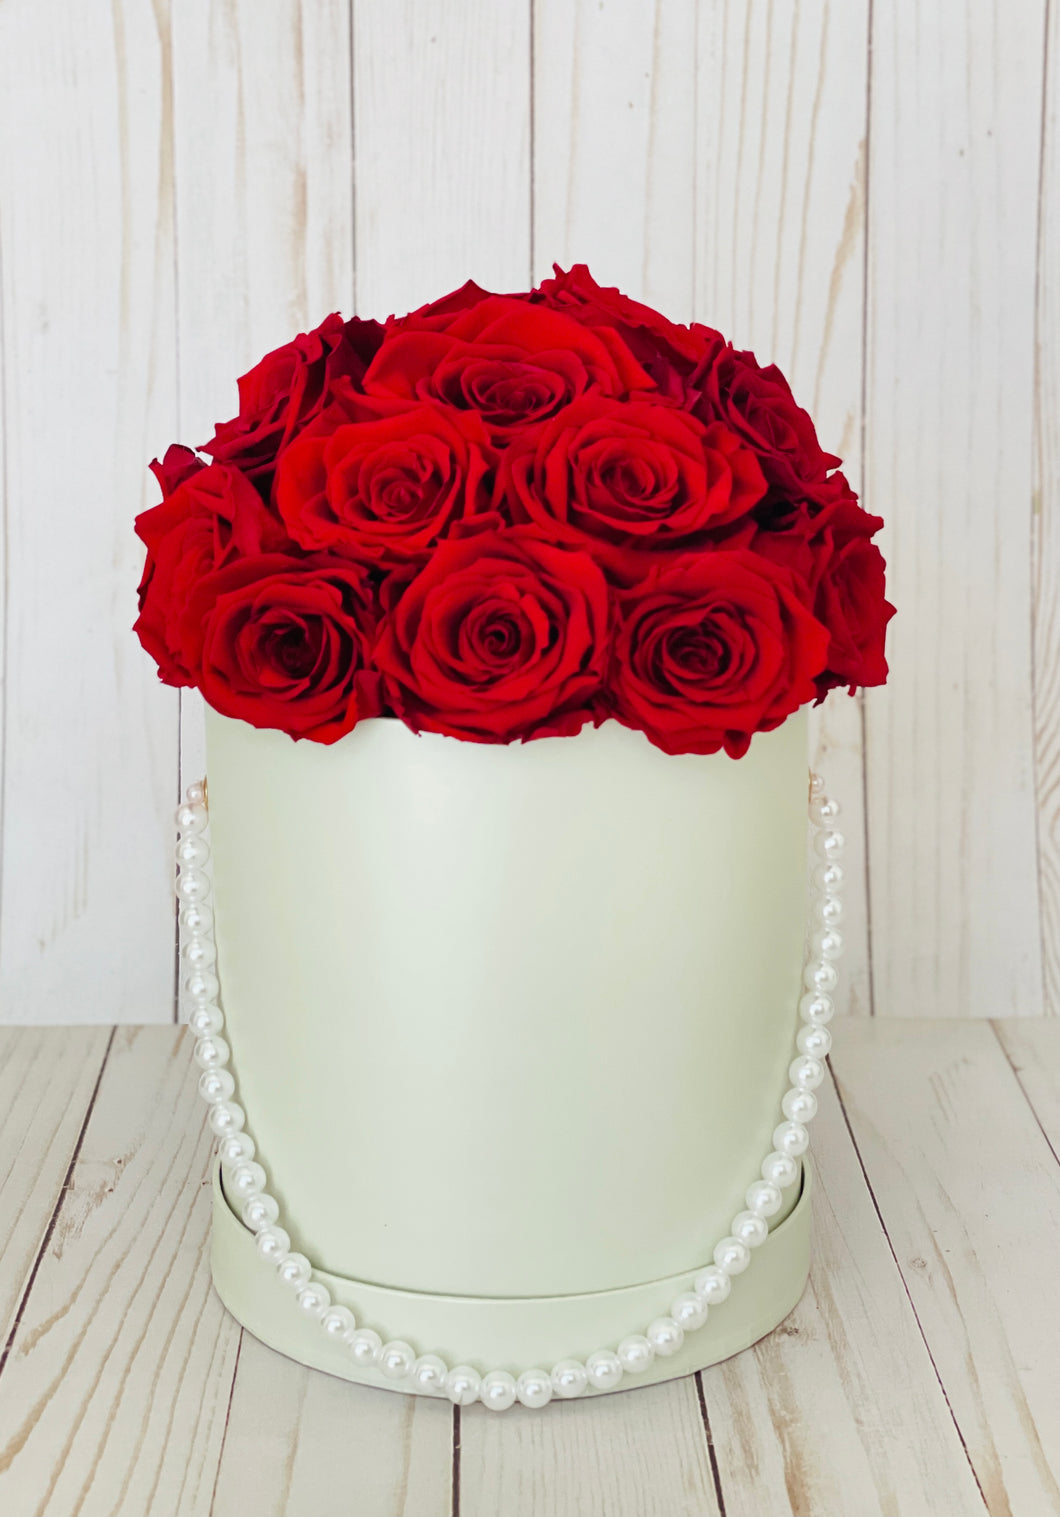 Medium Round Gray Box with Red Roses